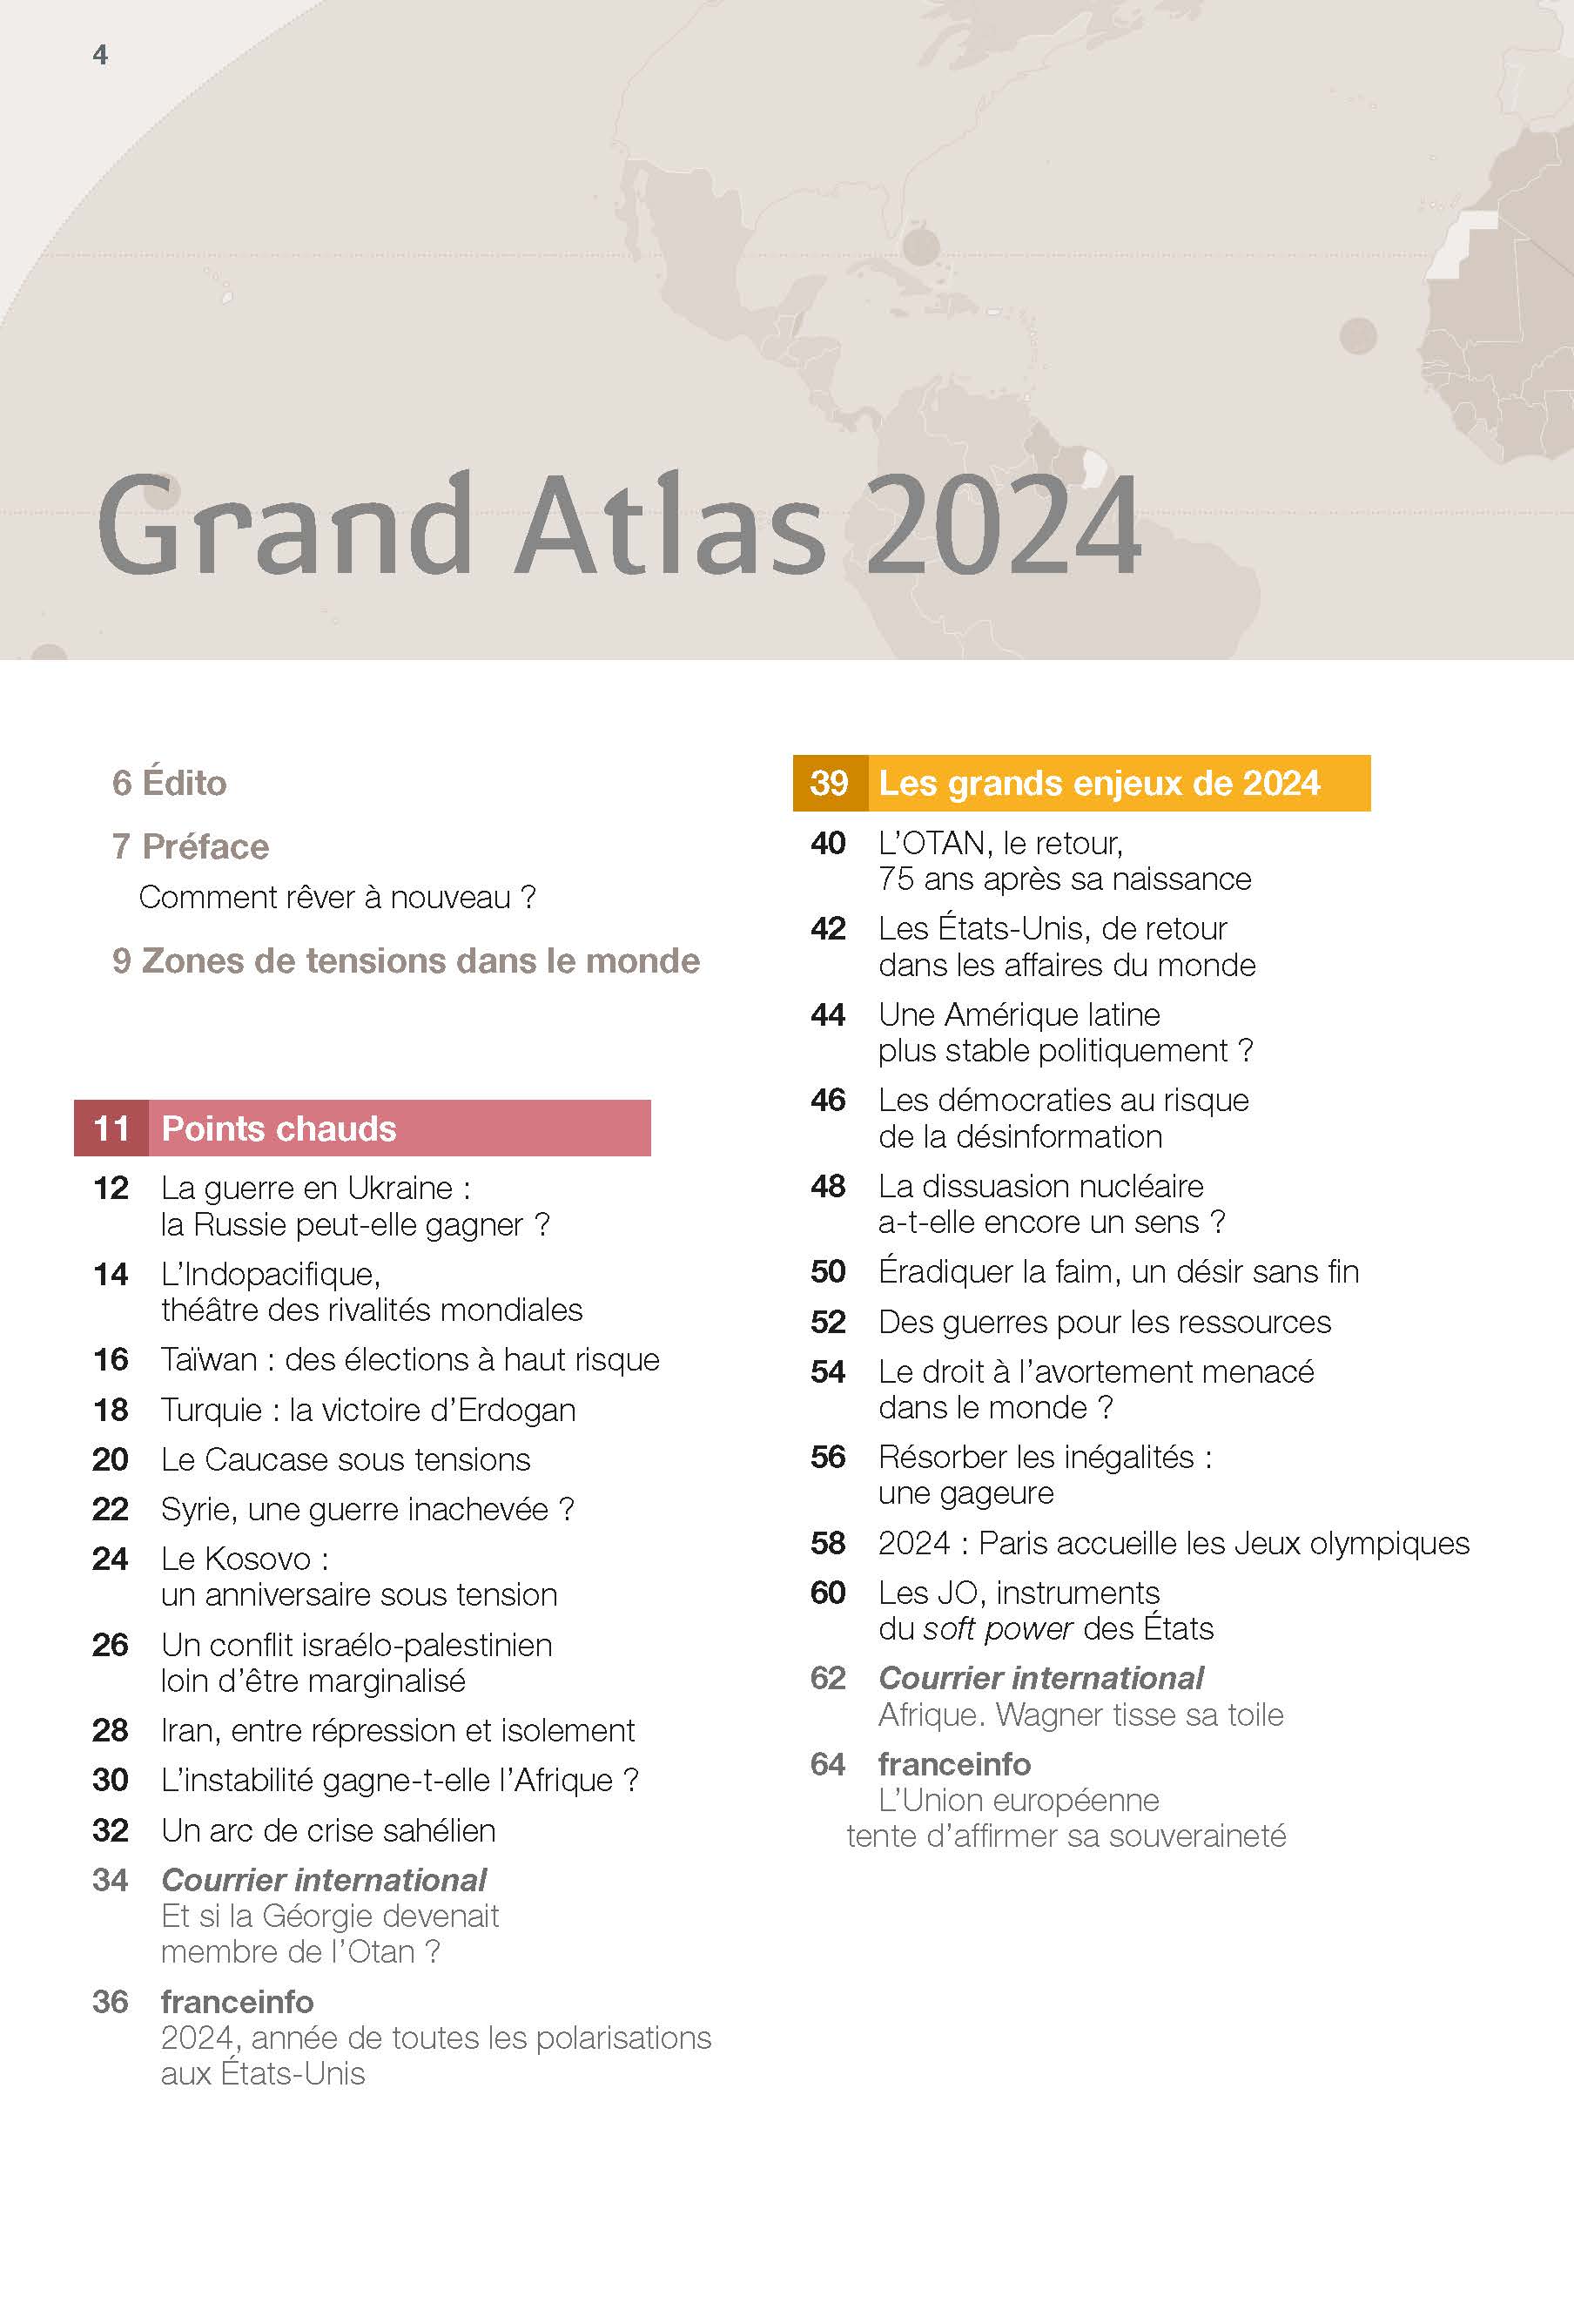 Grand Atlas 2024